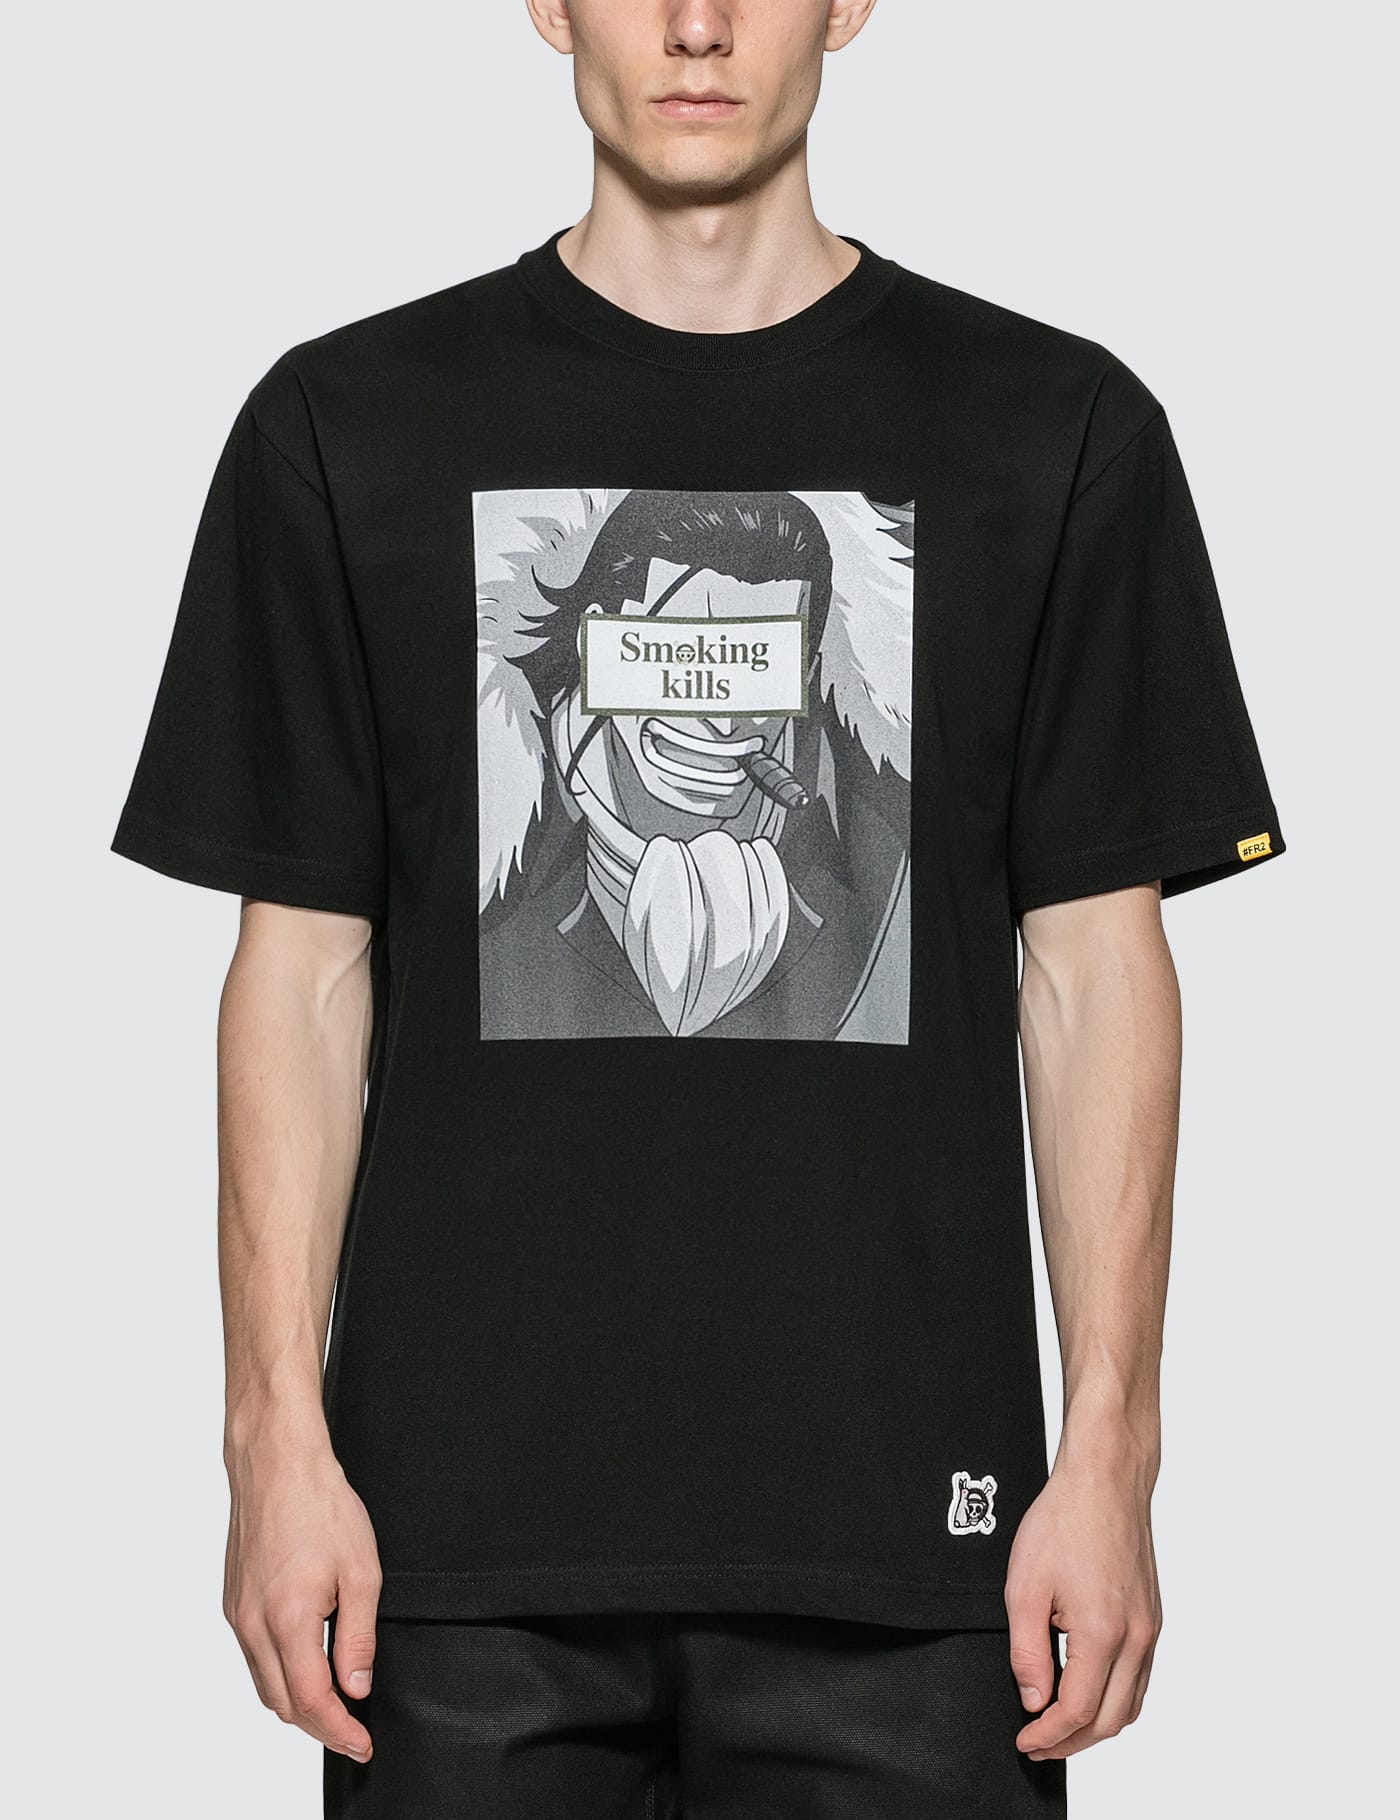 FR2 - #FR2 X One Piece Crocodile Smokers T-shirt | HBX - ハイプ ...